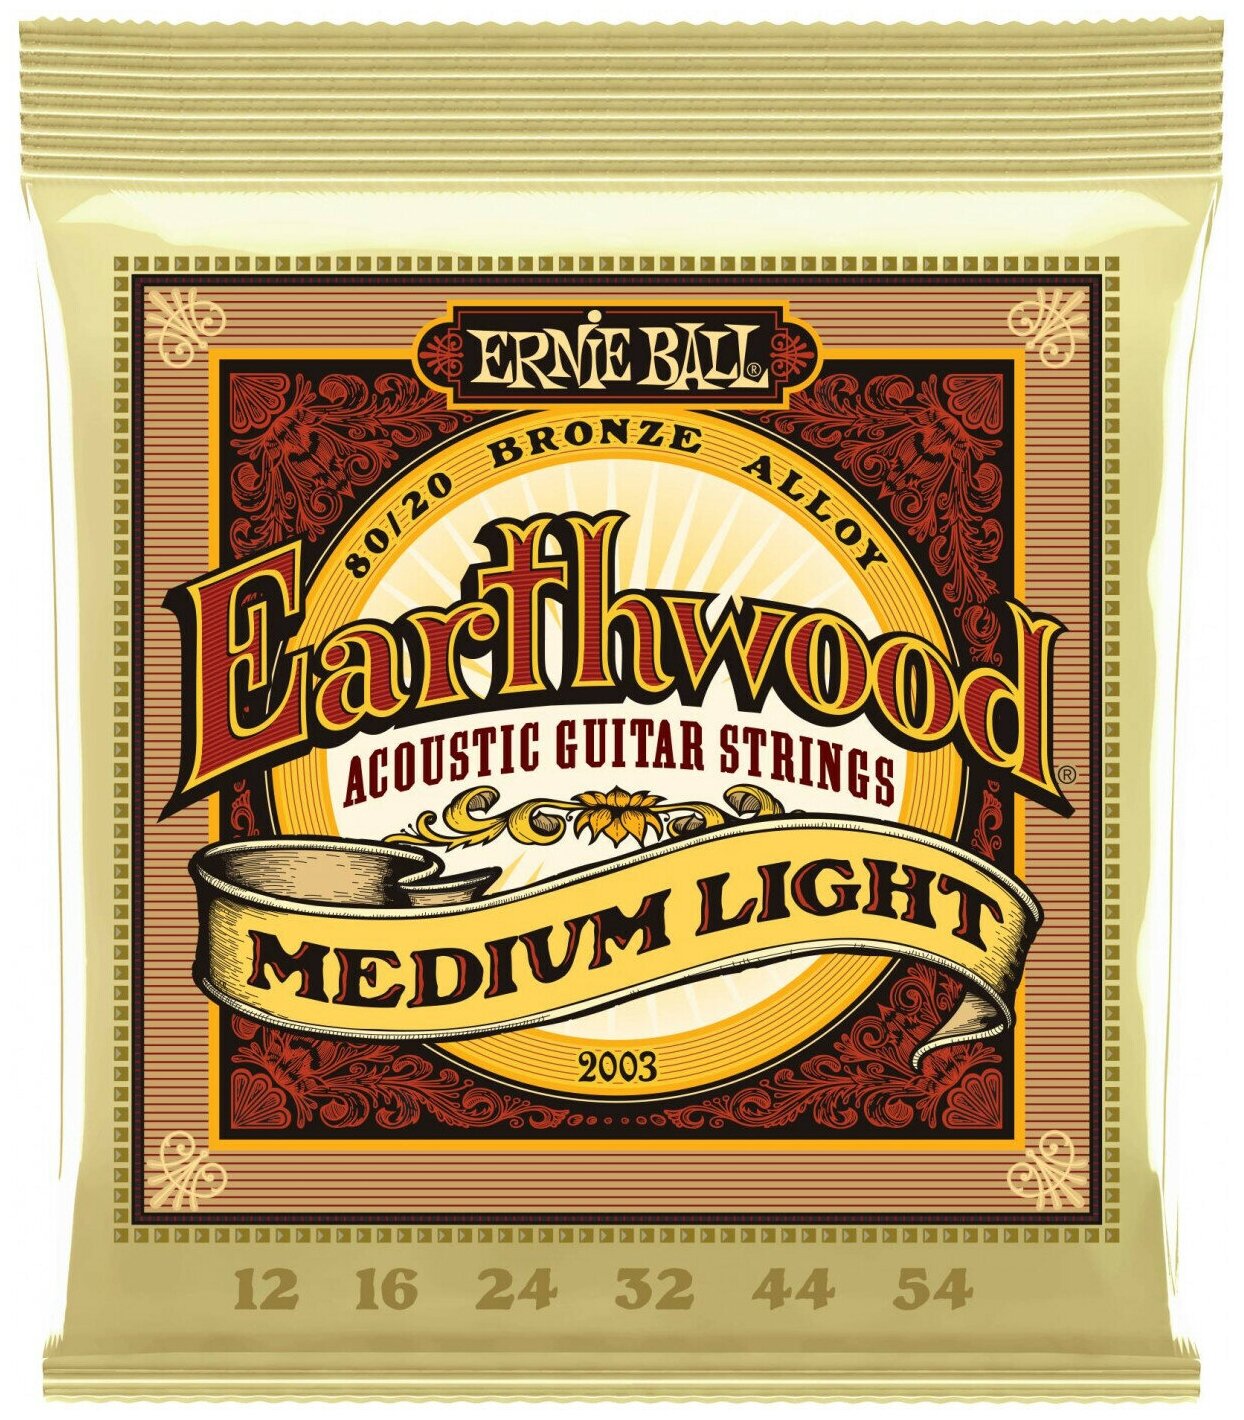 Ernie Ball 2003 струны для акуст.гитары Earthwood 80/20 Bronze Medium Light (12-16-24w-32-44-54). - фотография № 1